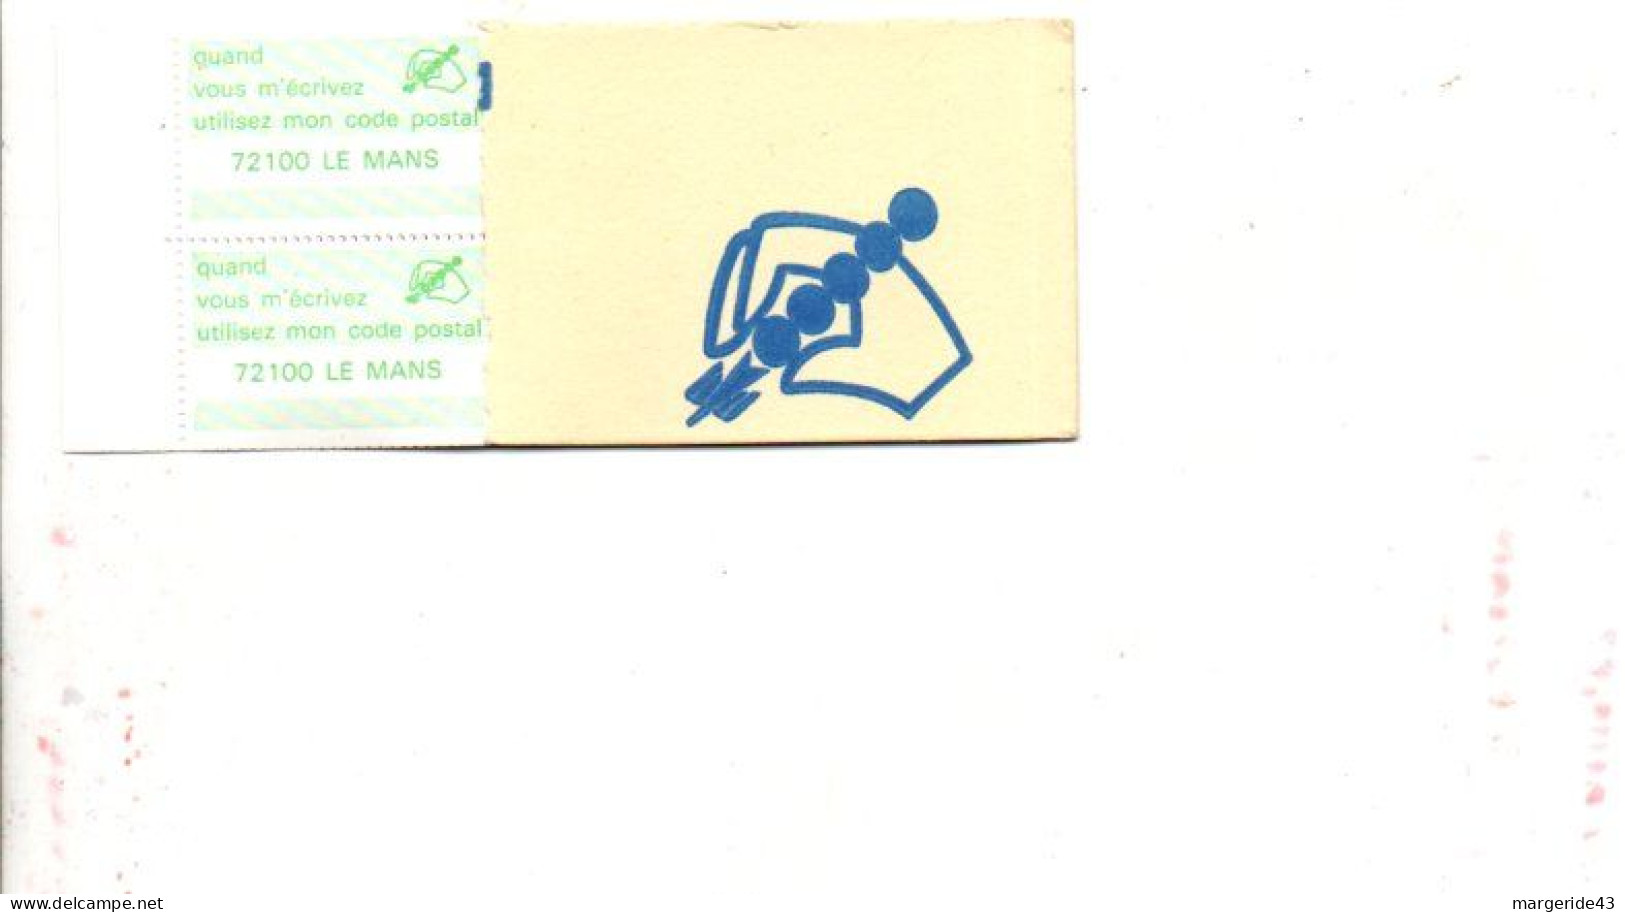 CARNET CODE POSTAL - 72100 LE MANS VERTE - Blokken & Postzegelboekjes